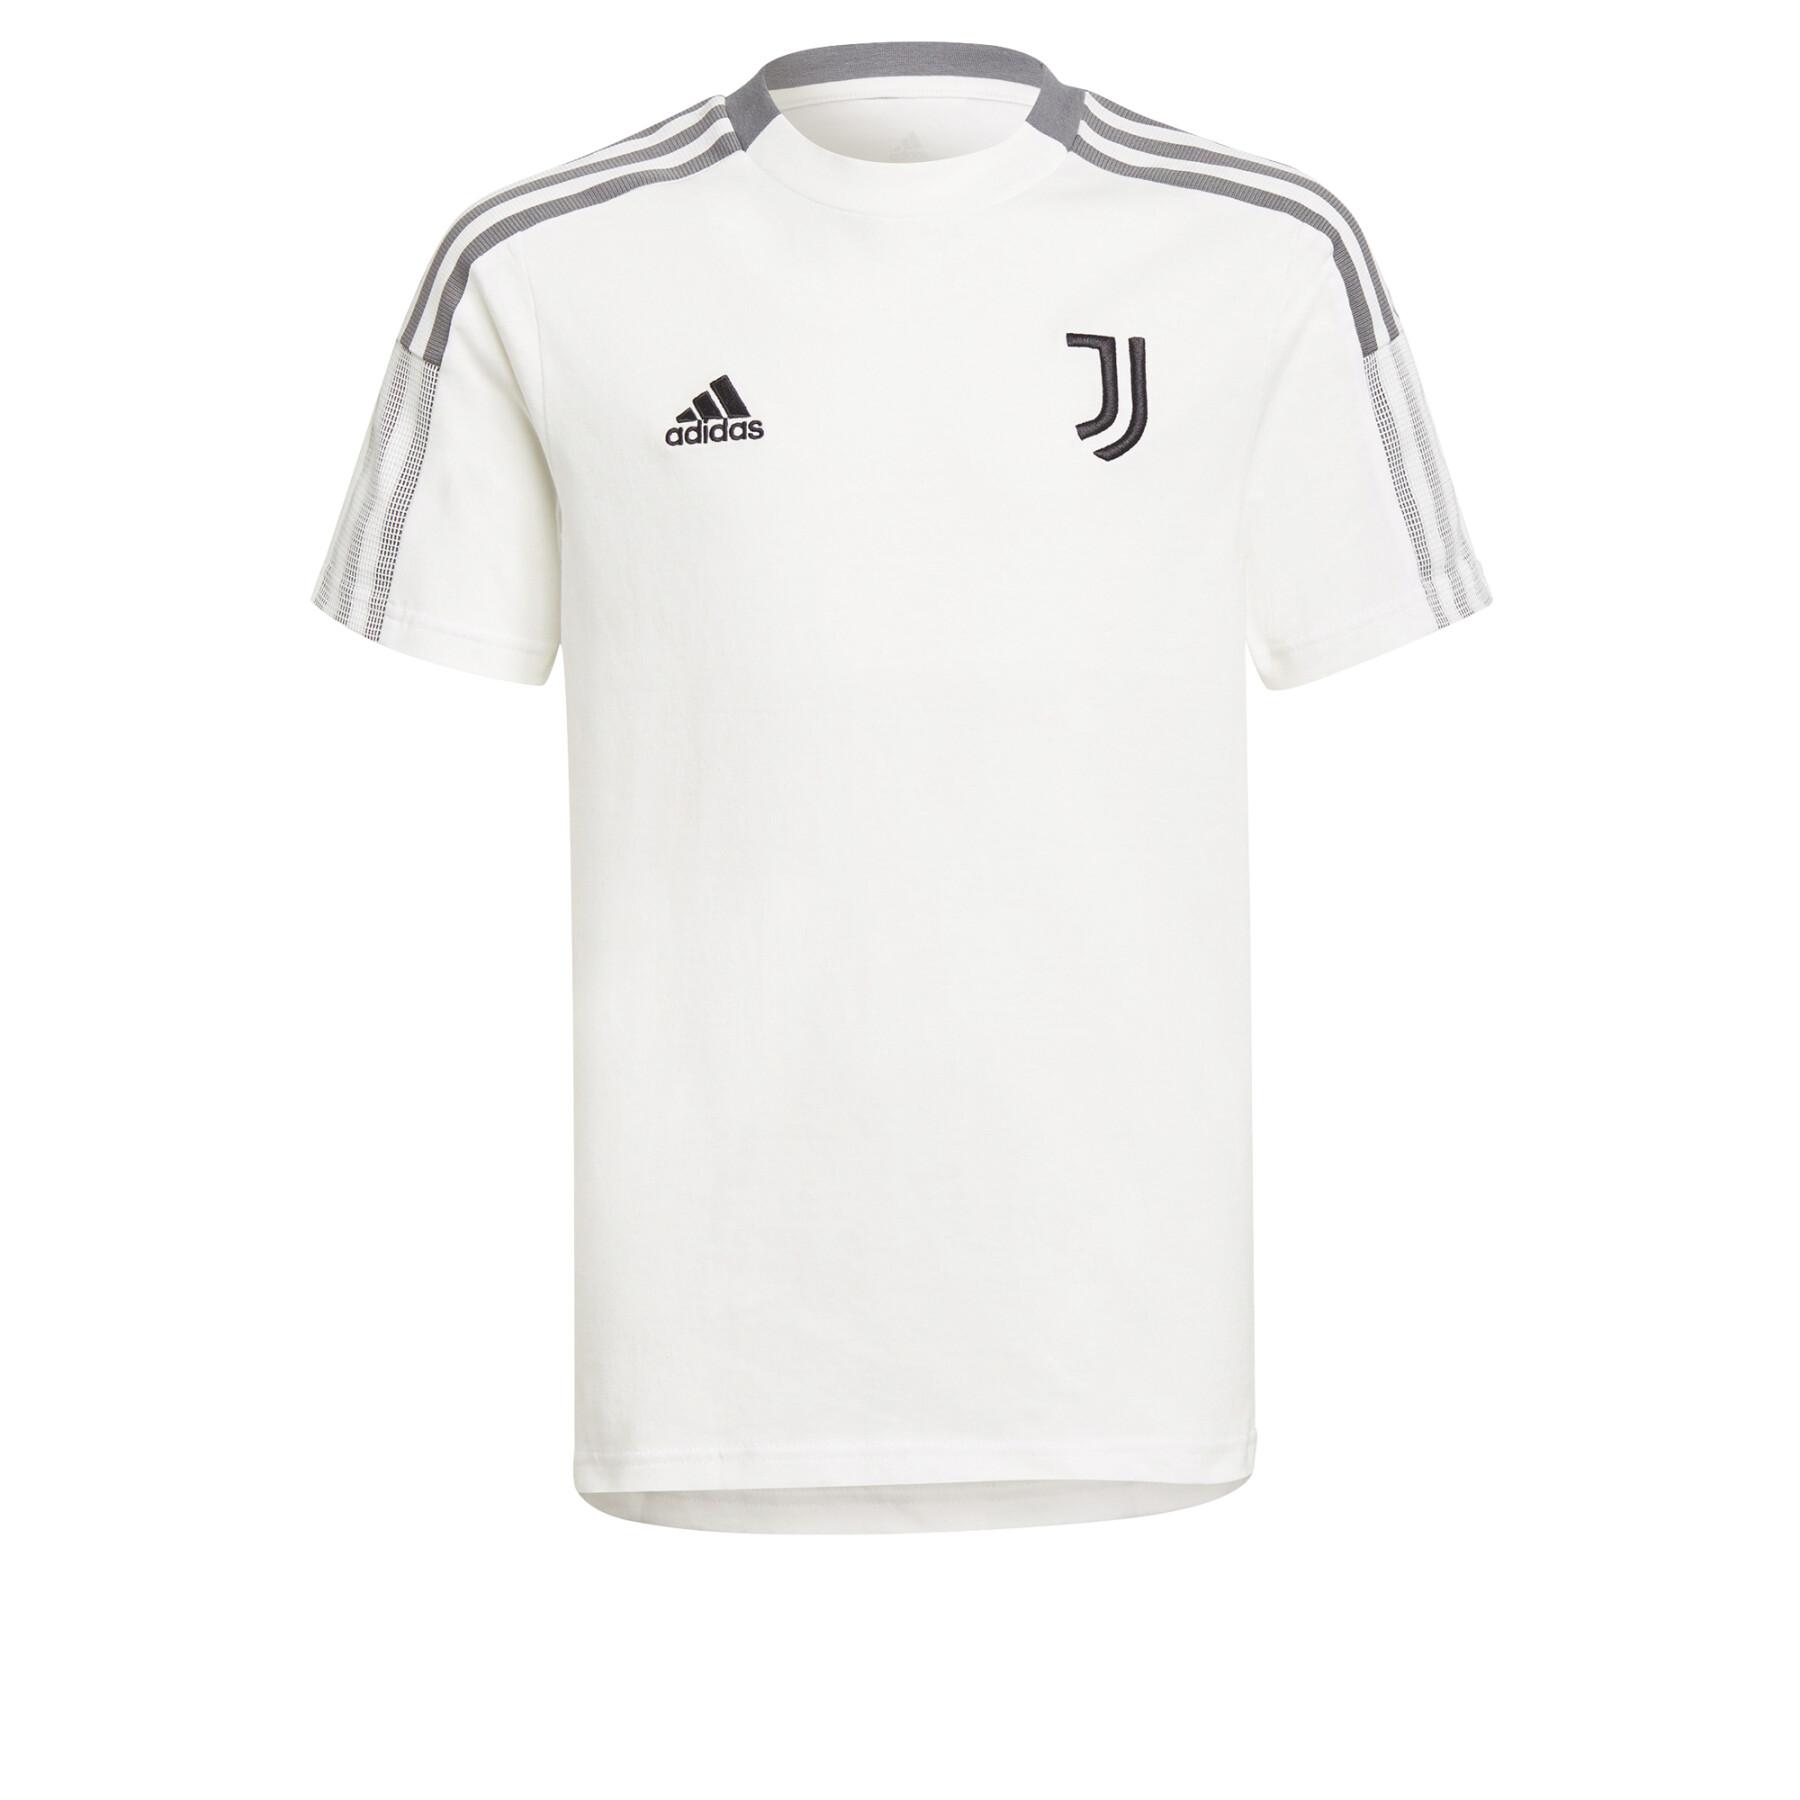 Kinder-T-shirt Juventus Tiro